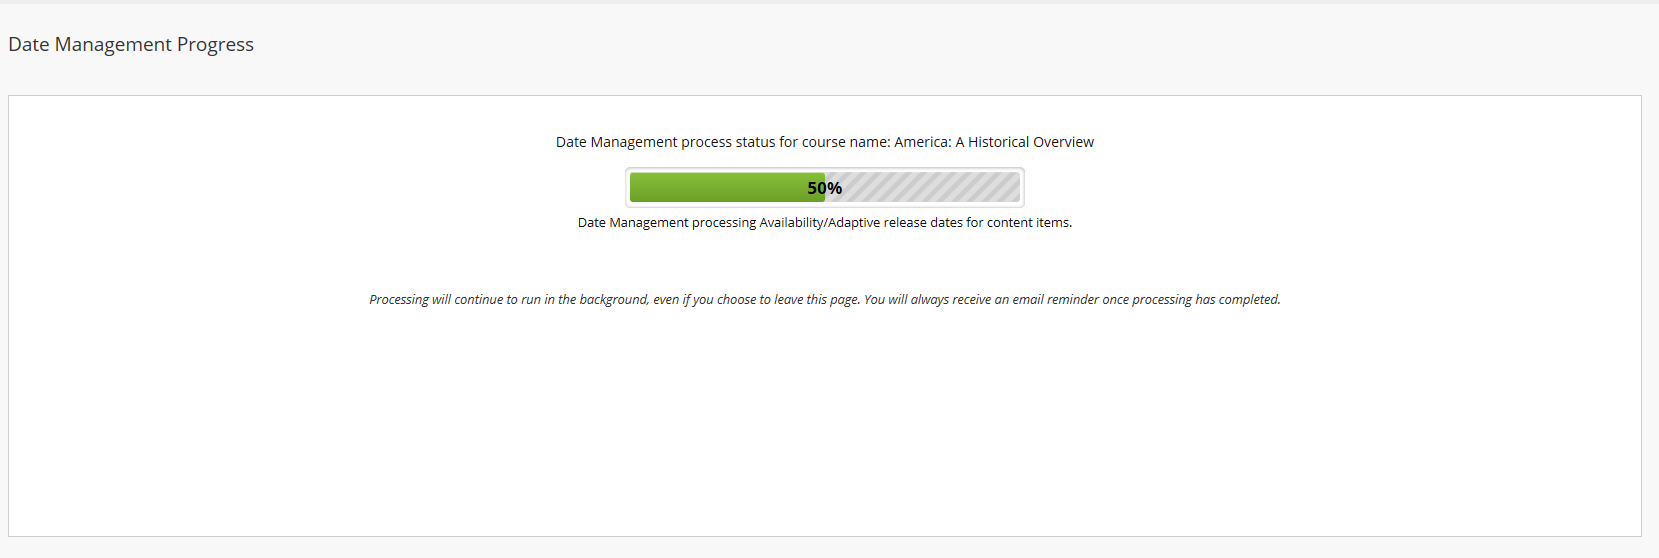 Date management progress screen, showing the green progress bar at 50 per cent